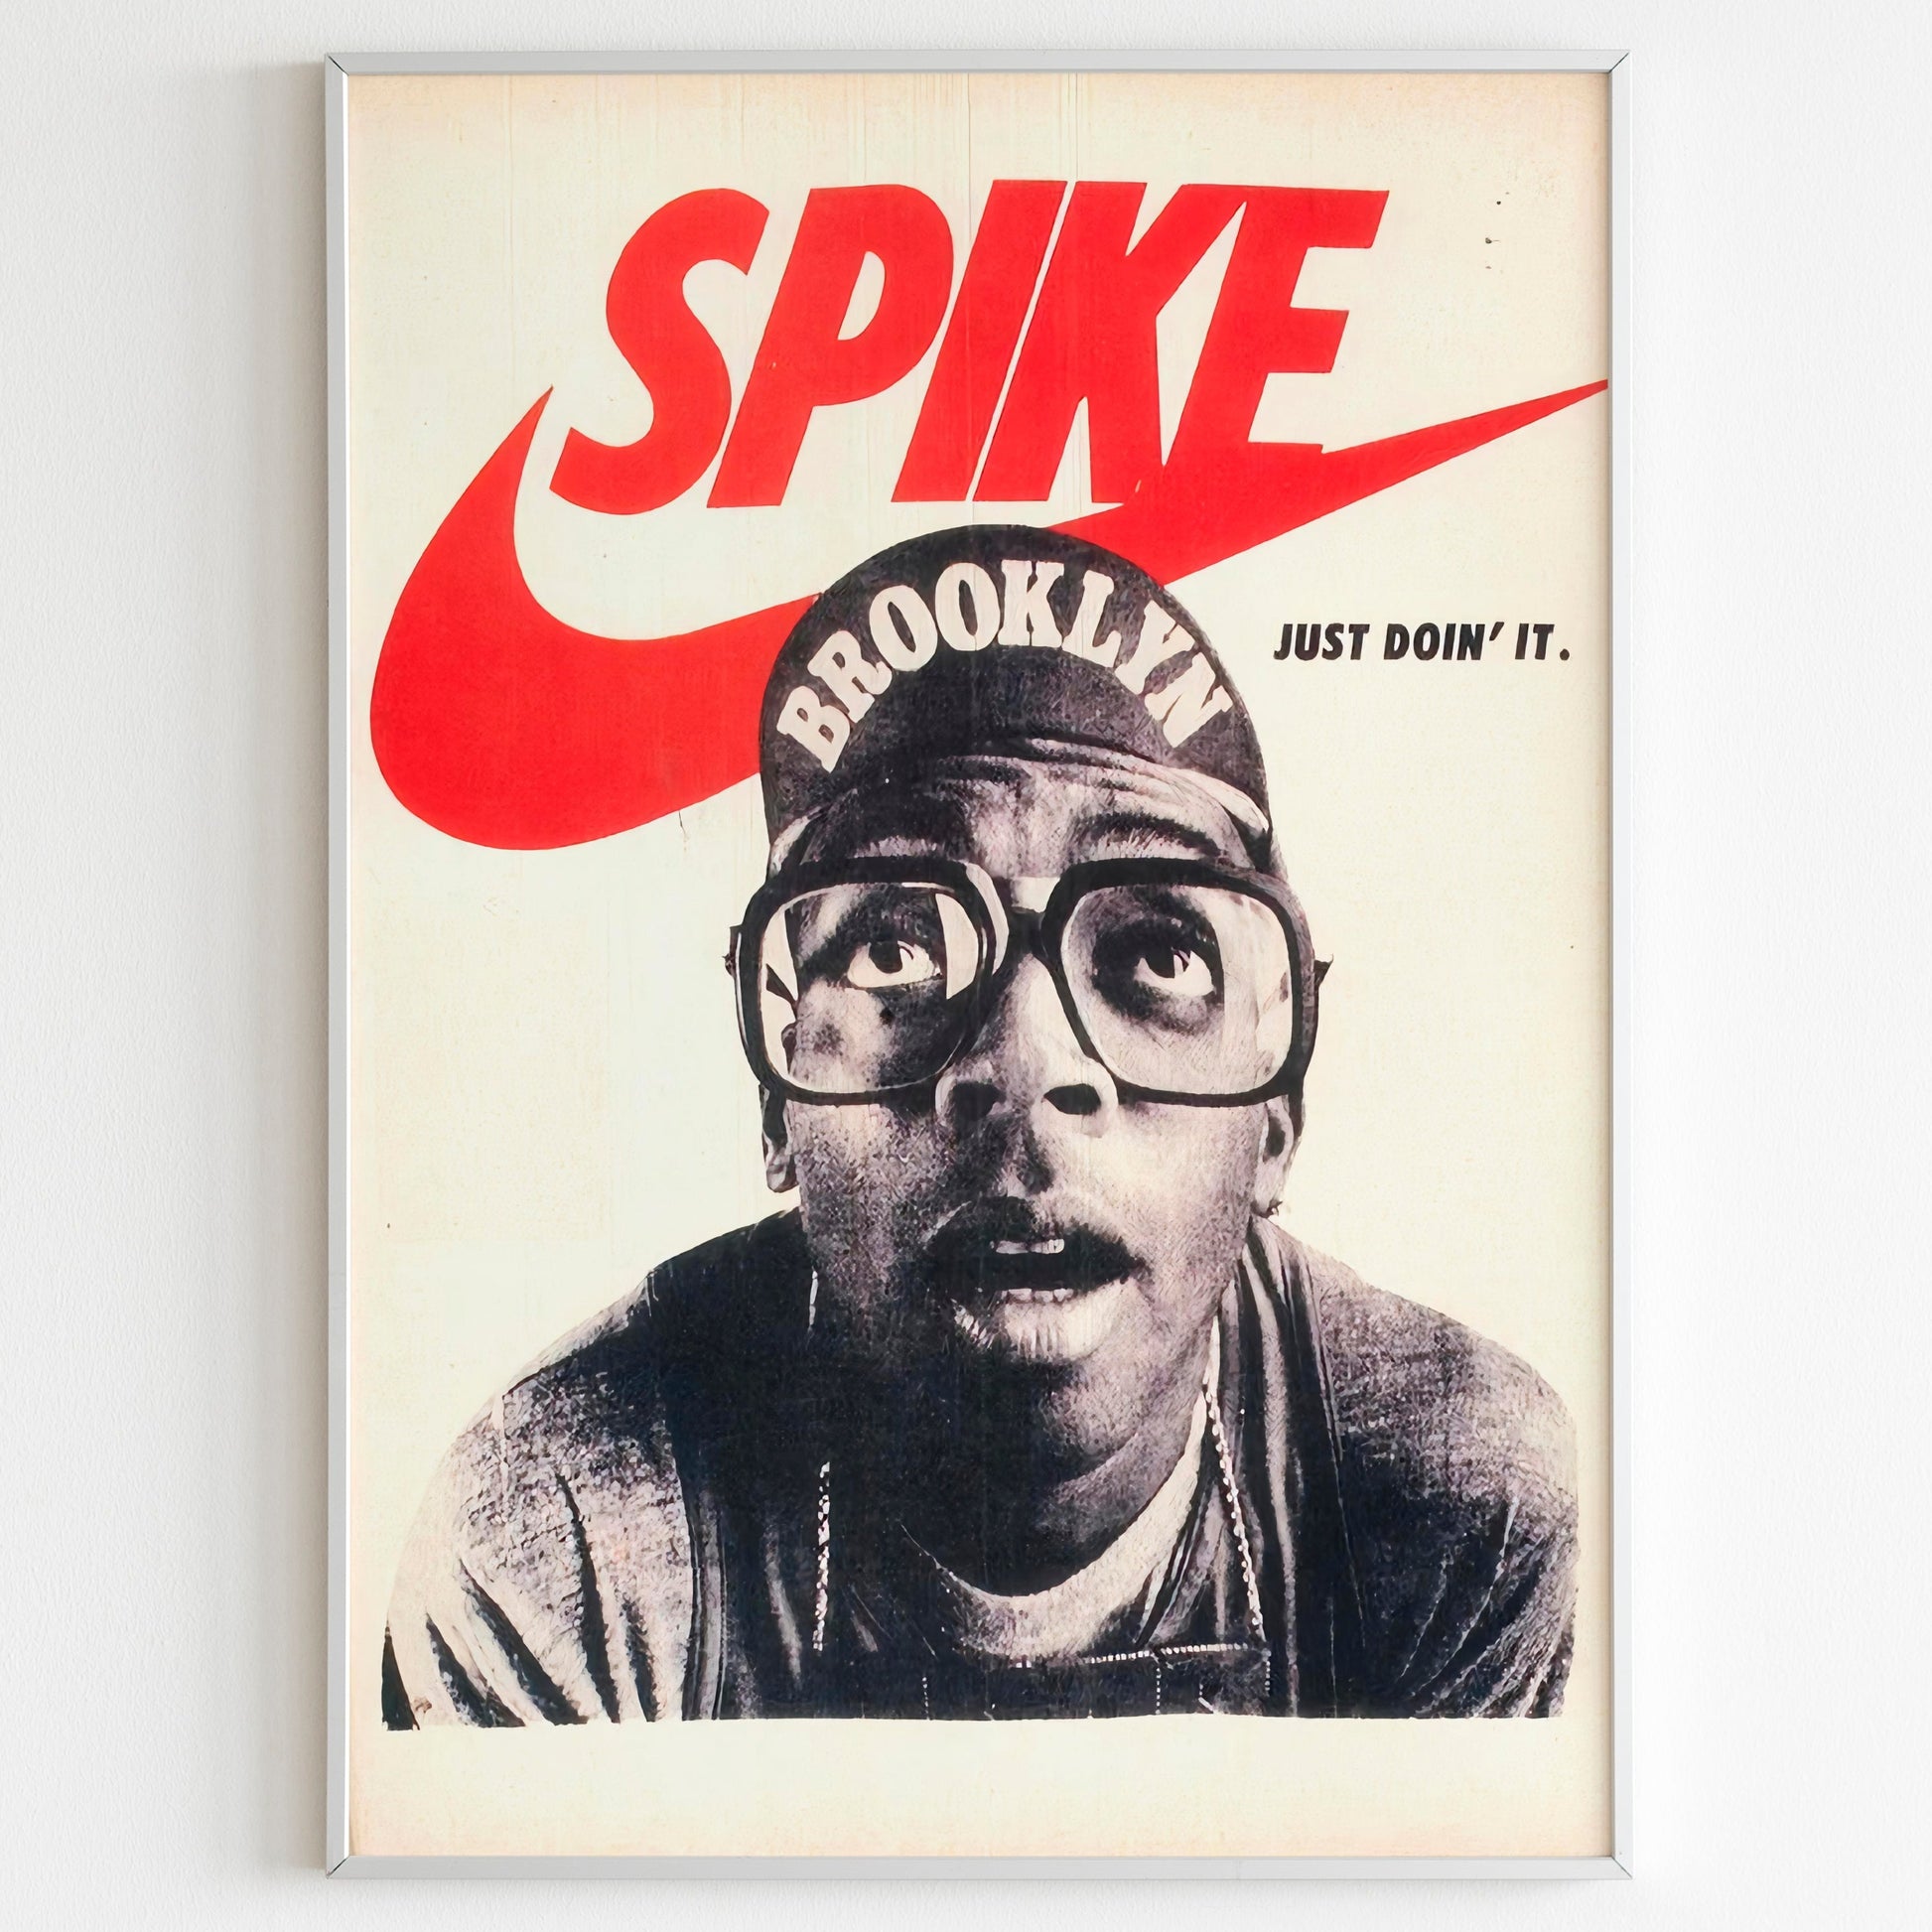 Nike Spike Lee "Just Doin' It" Advertising Poster, Brooklyn Air Jordan 90s Style USA Print, Vintage Wall Art, Magazine Retro Advertisement